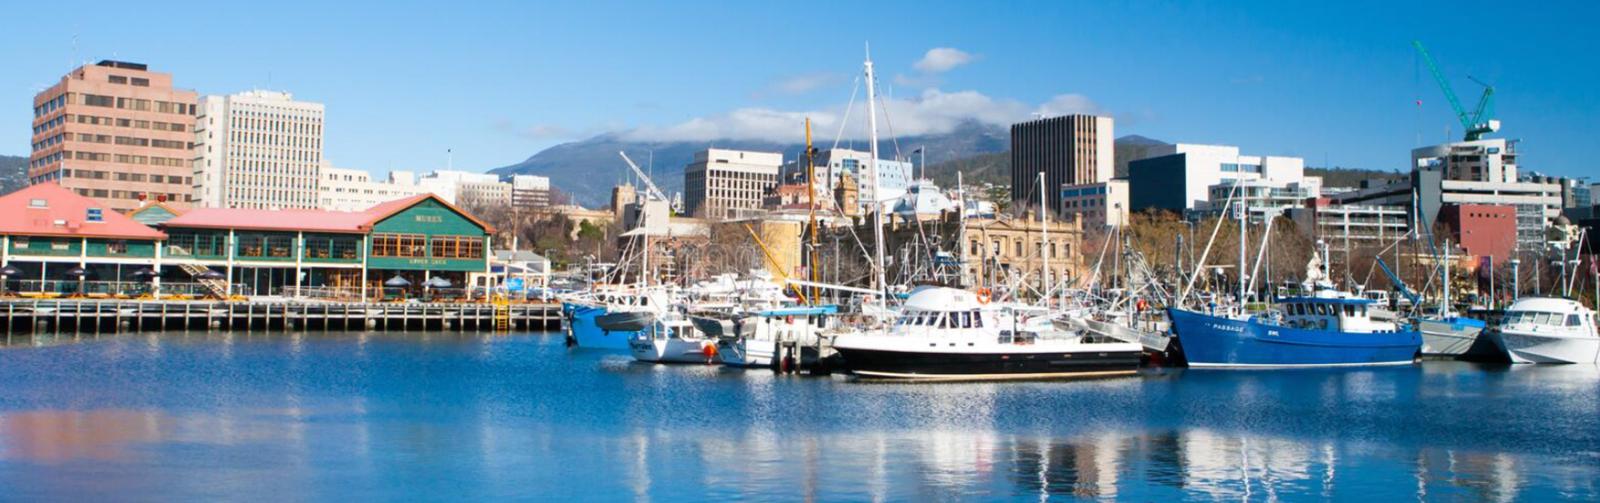 Hobart waterfront restaurants